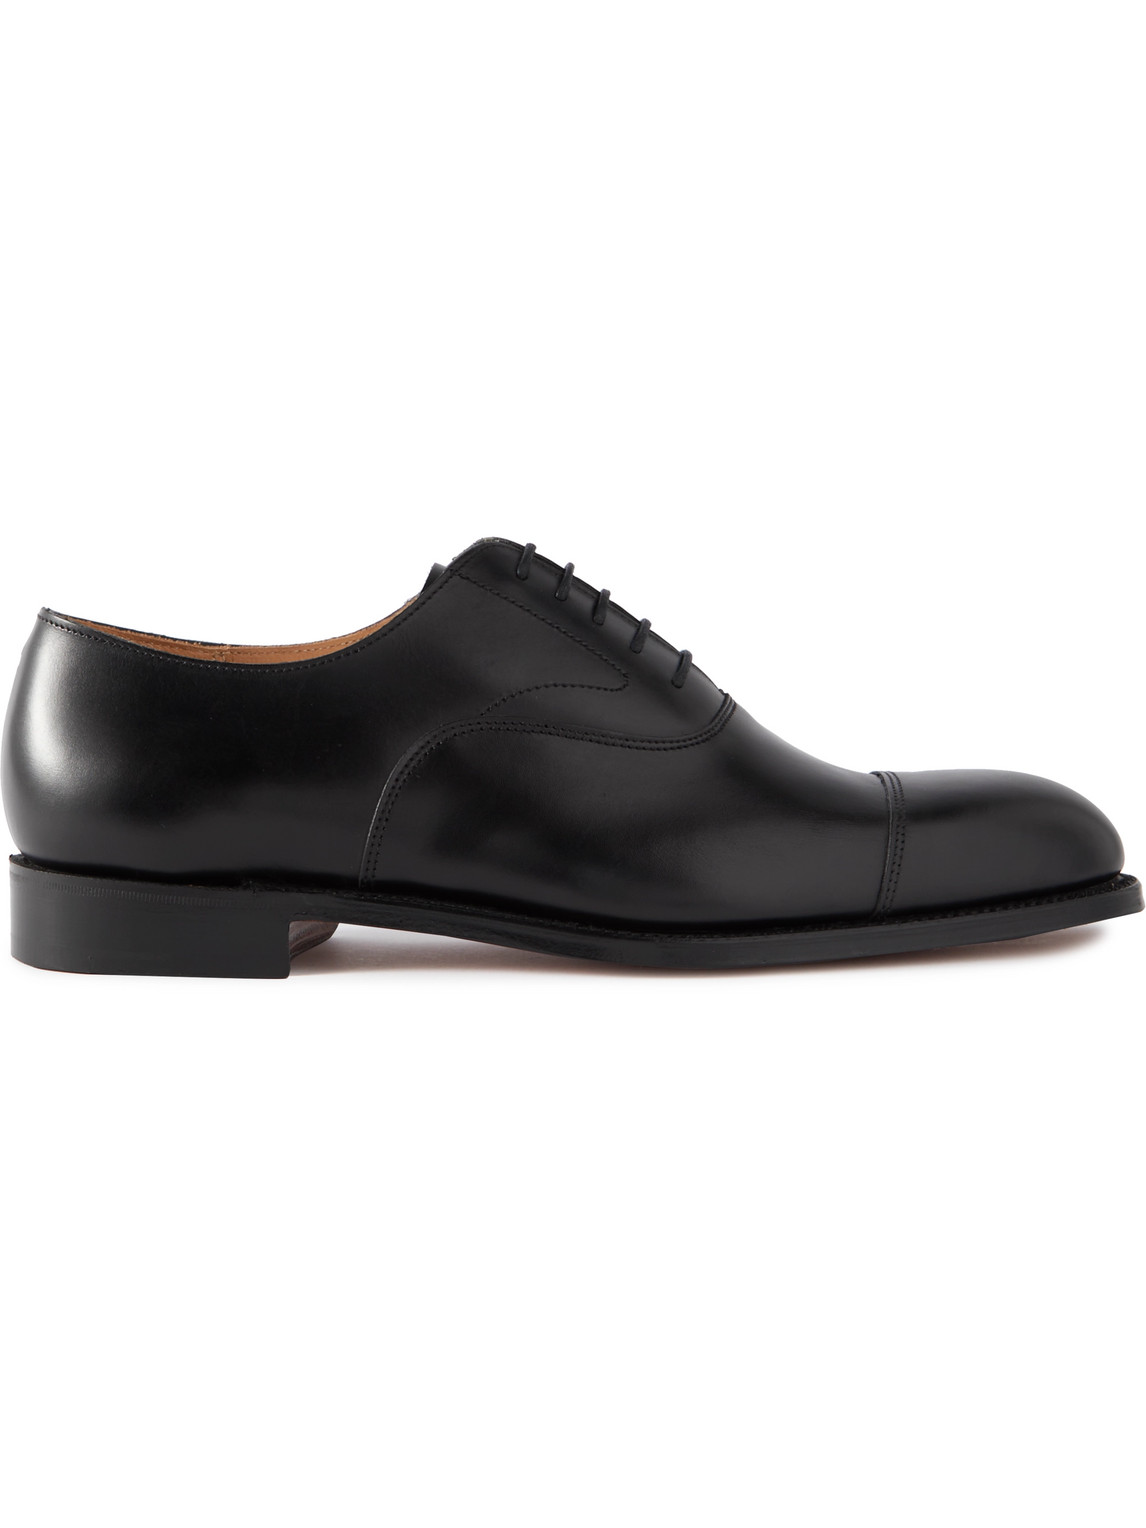 Grenson - Cambridge Leather Oxford Shoes - Men - Black - UK 12 von Grenson